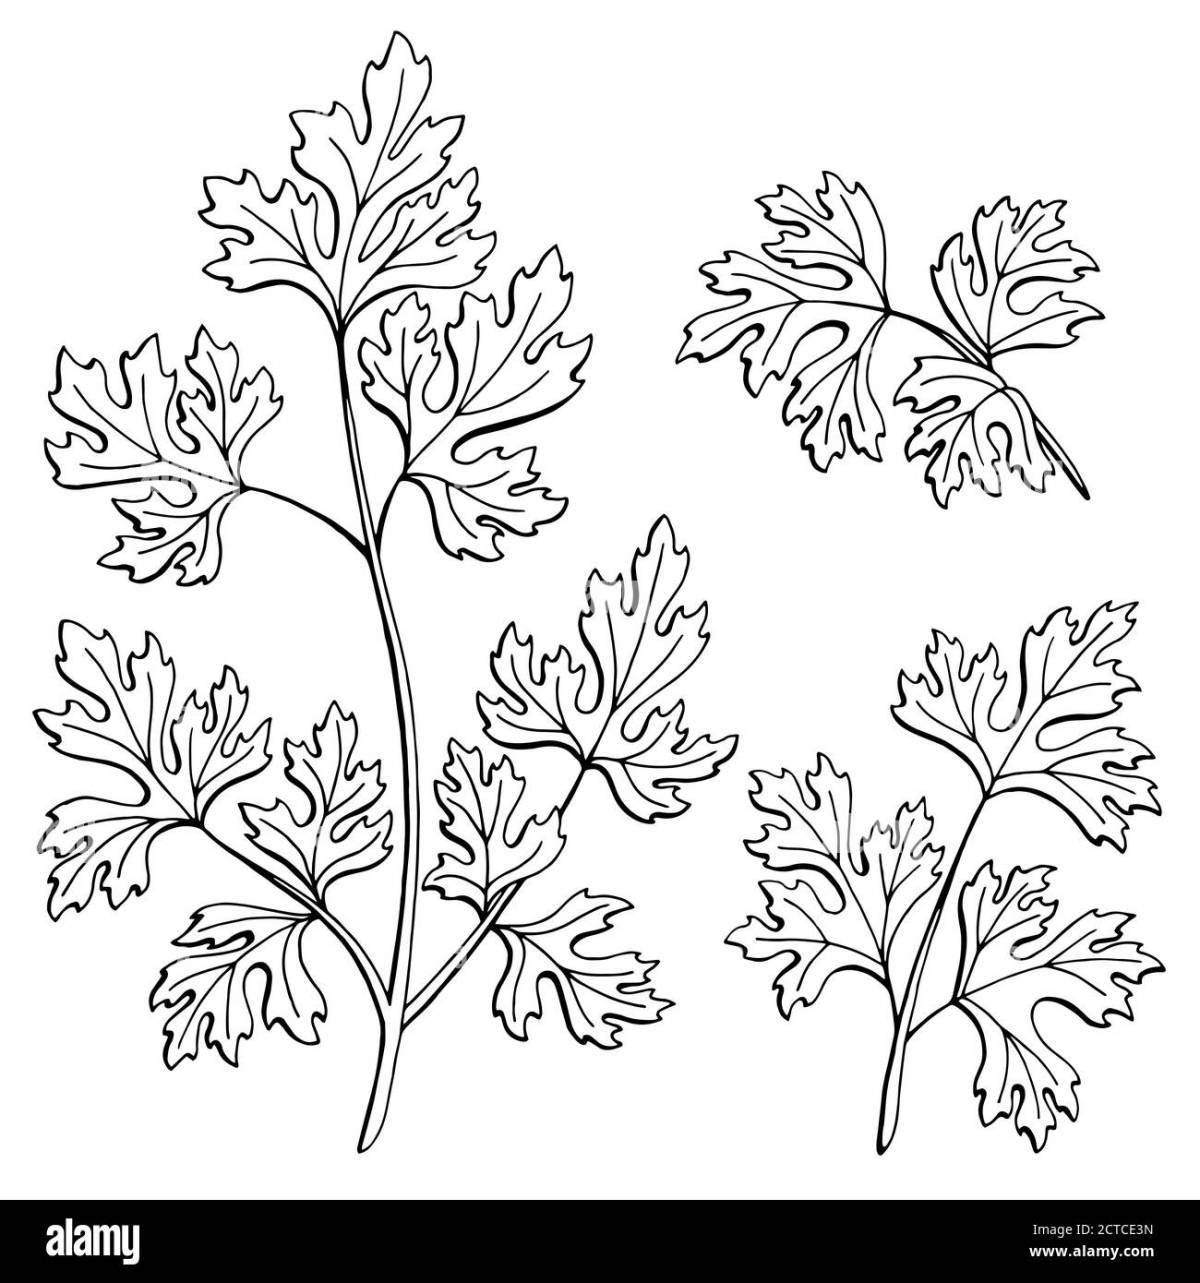 Living cilantro coloring page